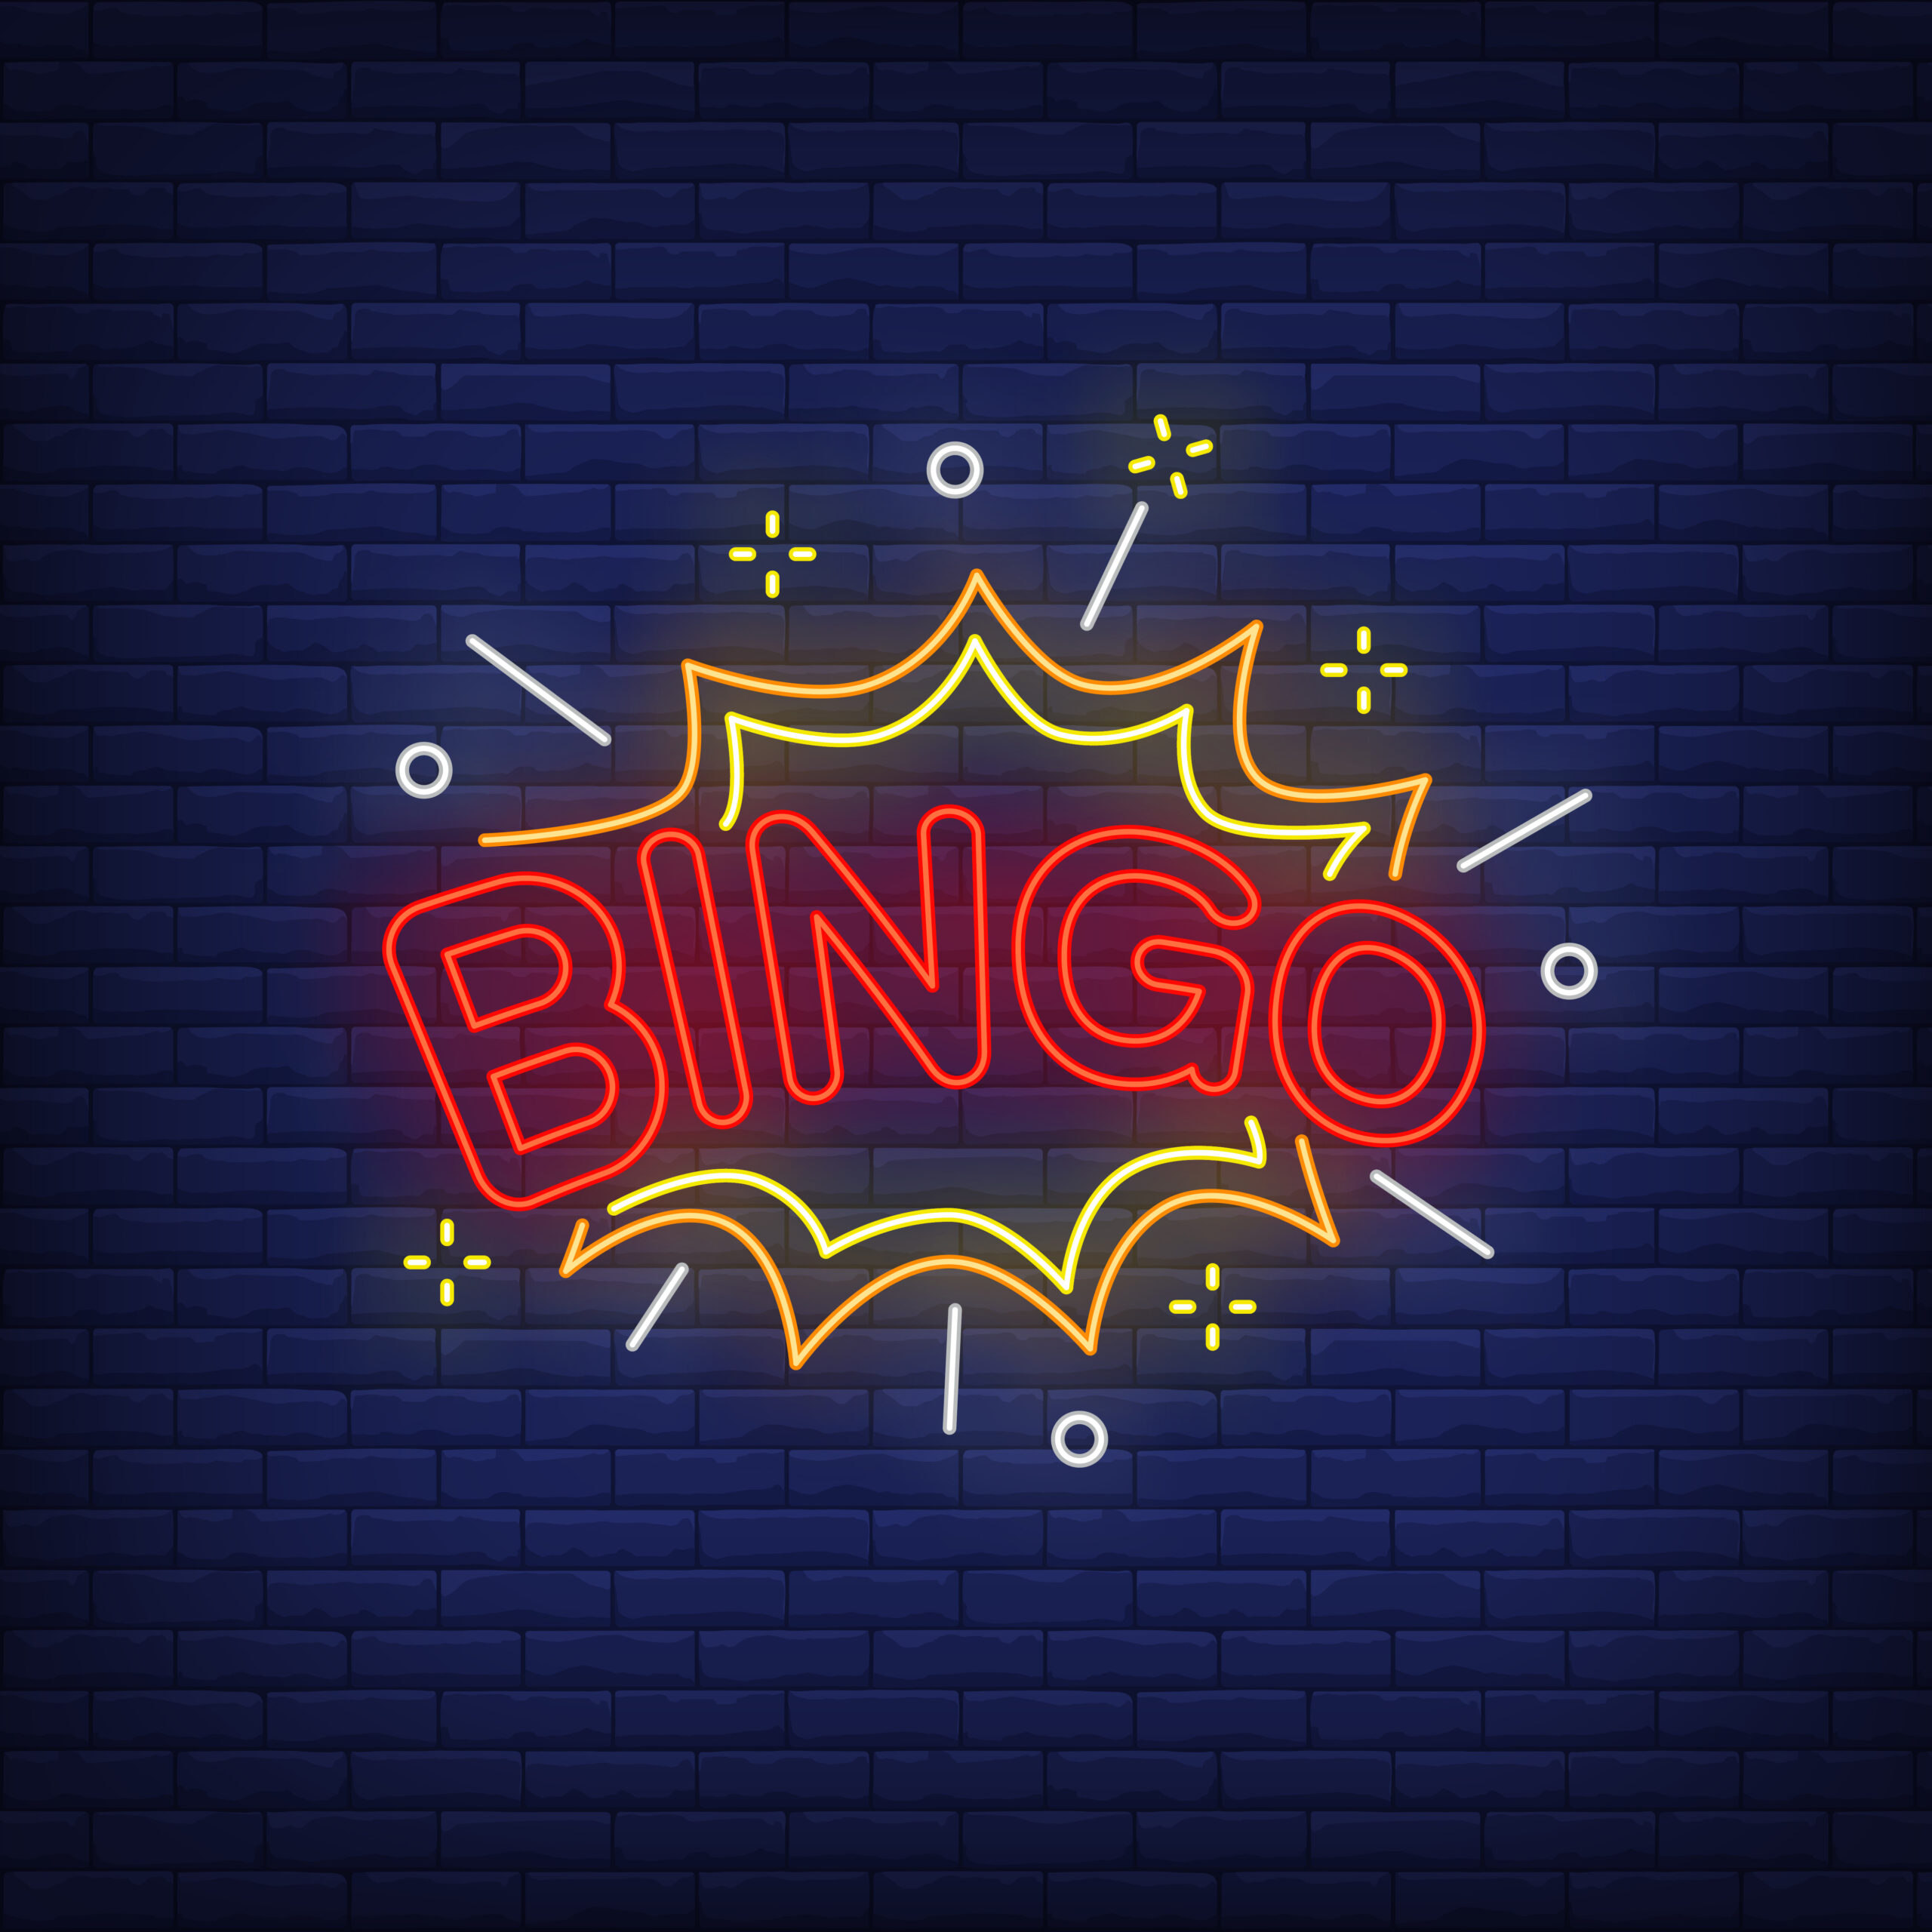 Bingo neon lettering and explosion. Gamble, win, entertainment design. Night bright neon sign, colorful billboard, light banner. Vector illustration in neon style.